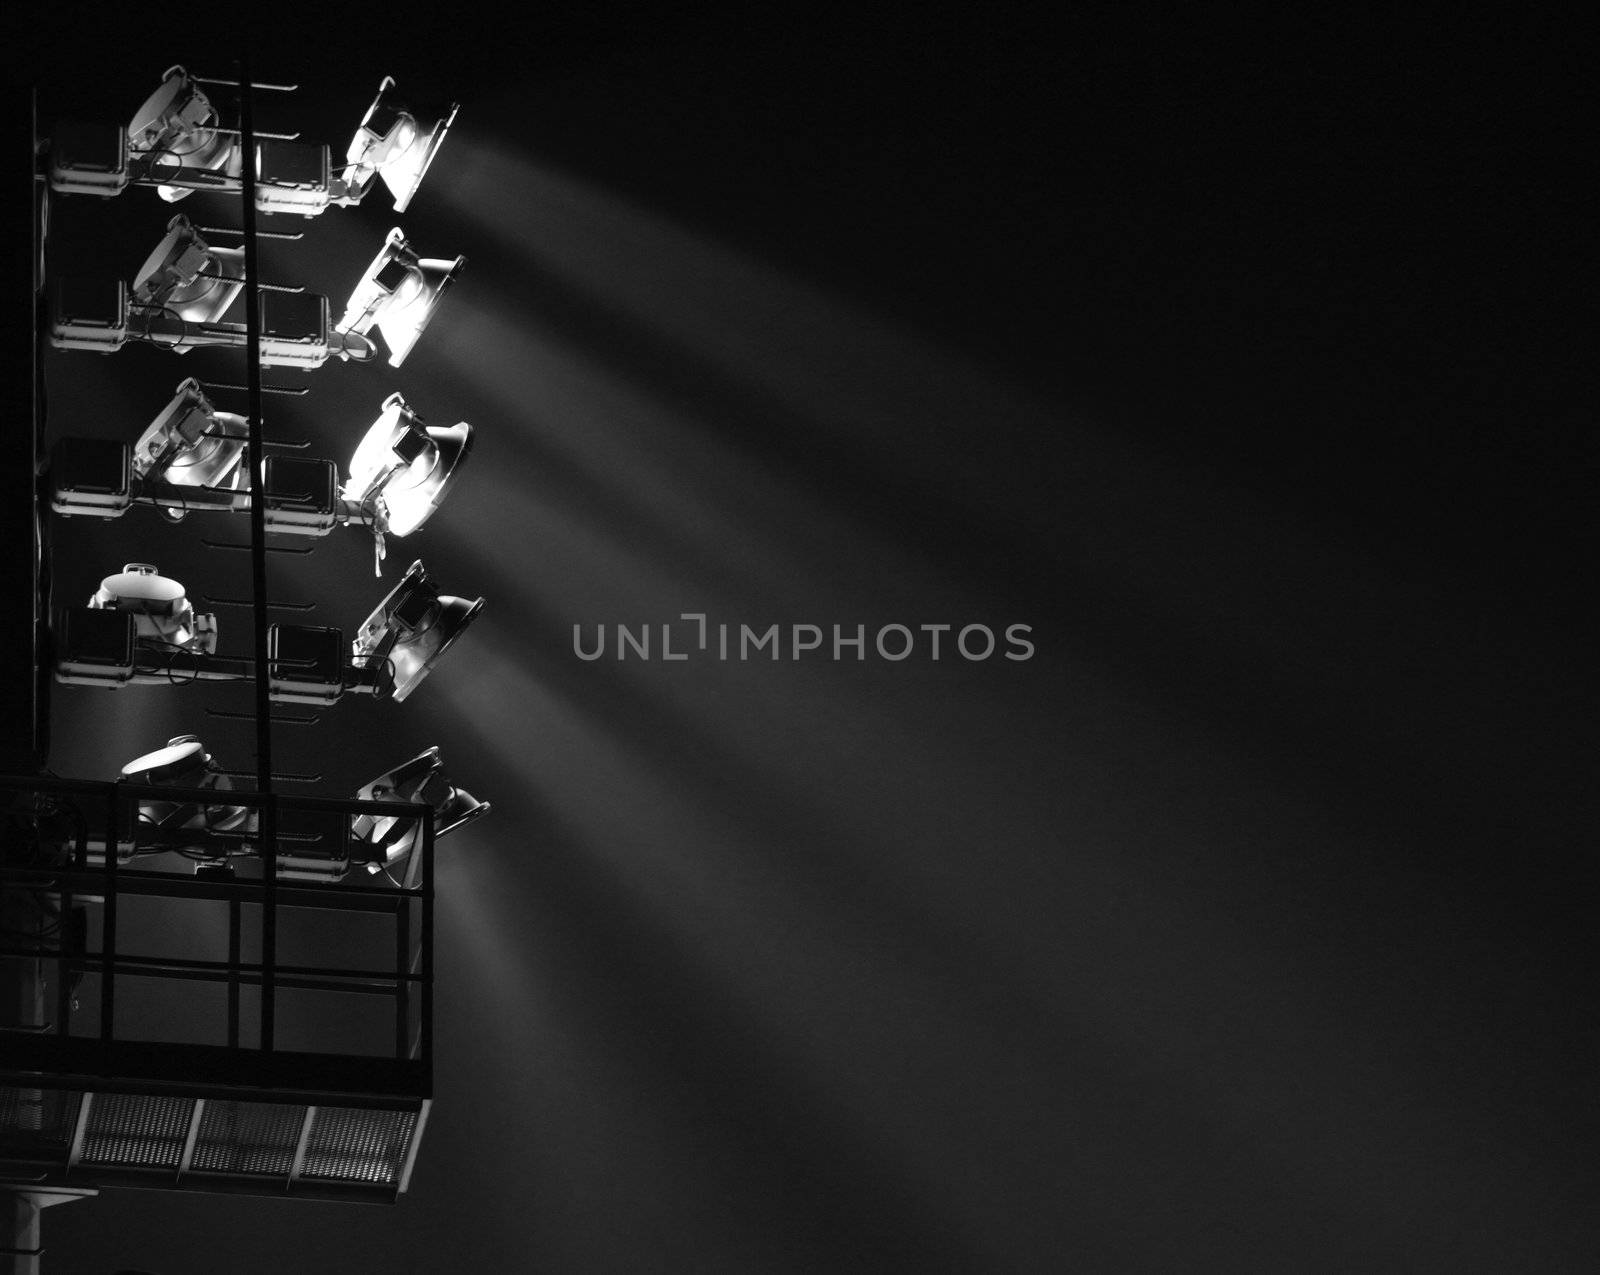 The Stadium Spot-light tower by Nneirda